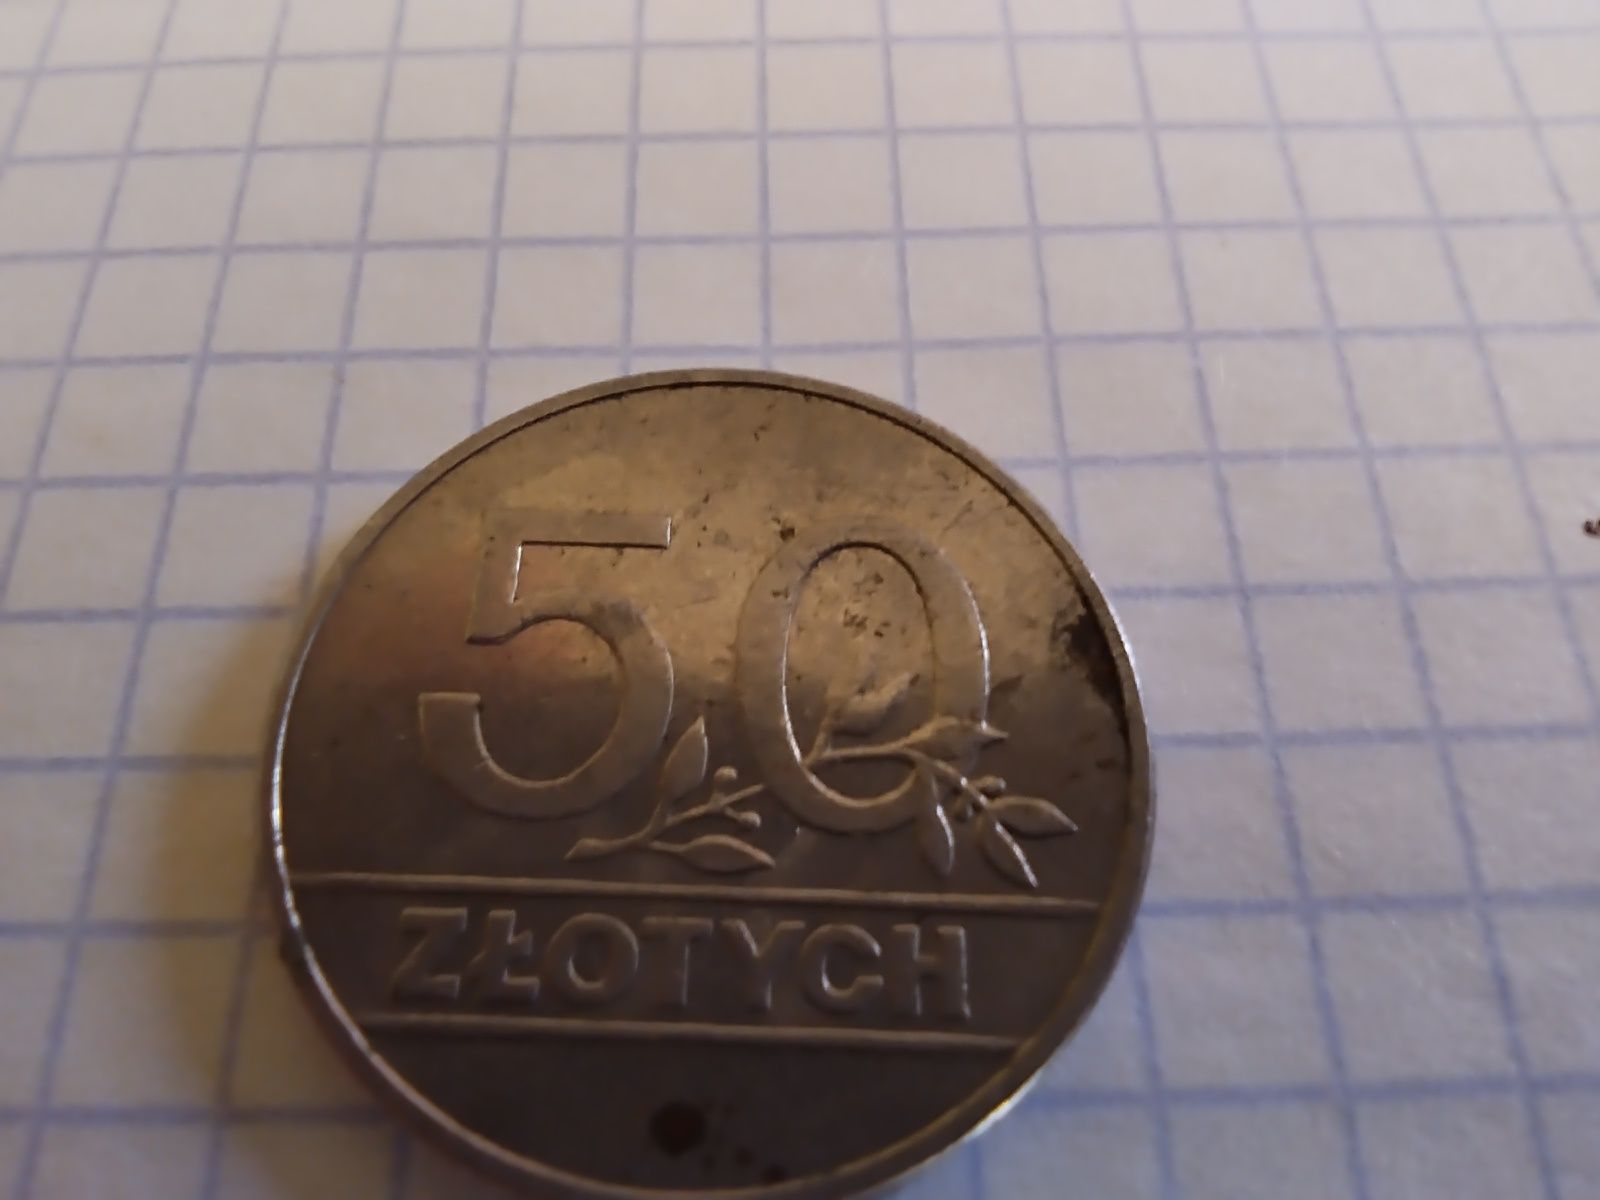 Moneta 50zł z roku 1990